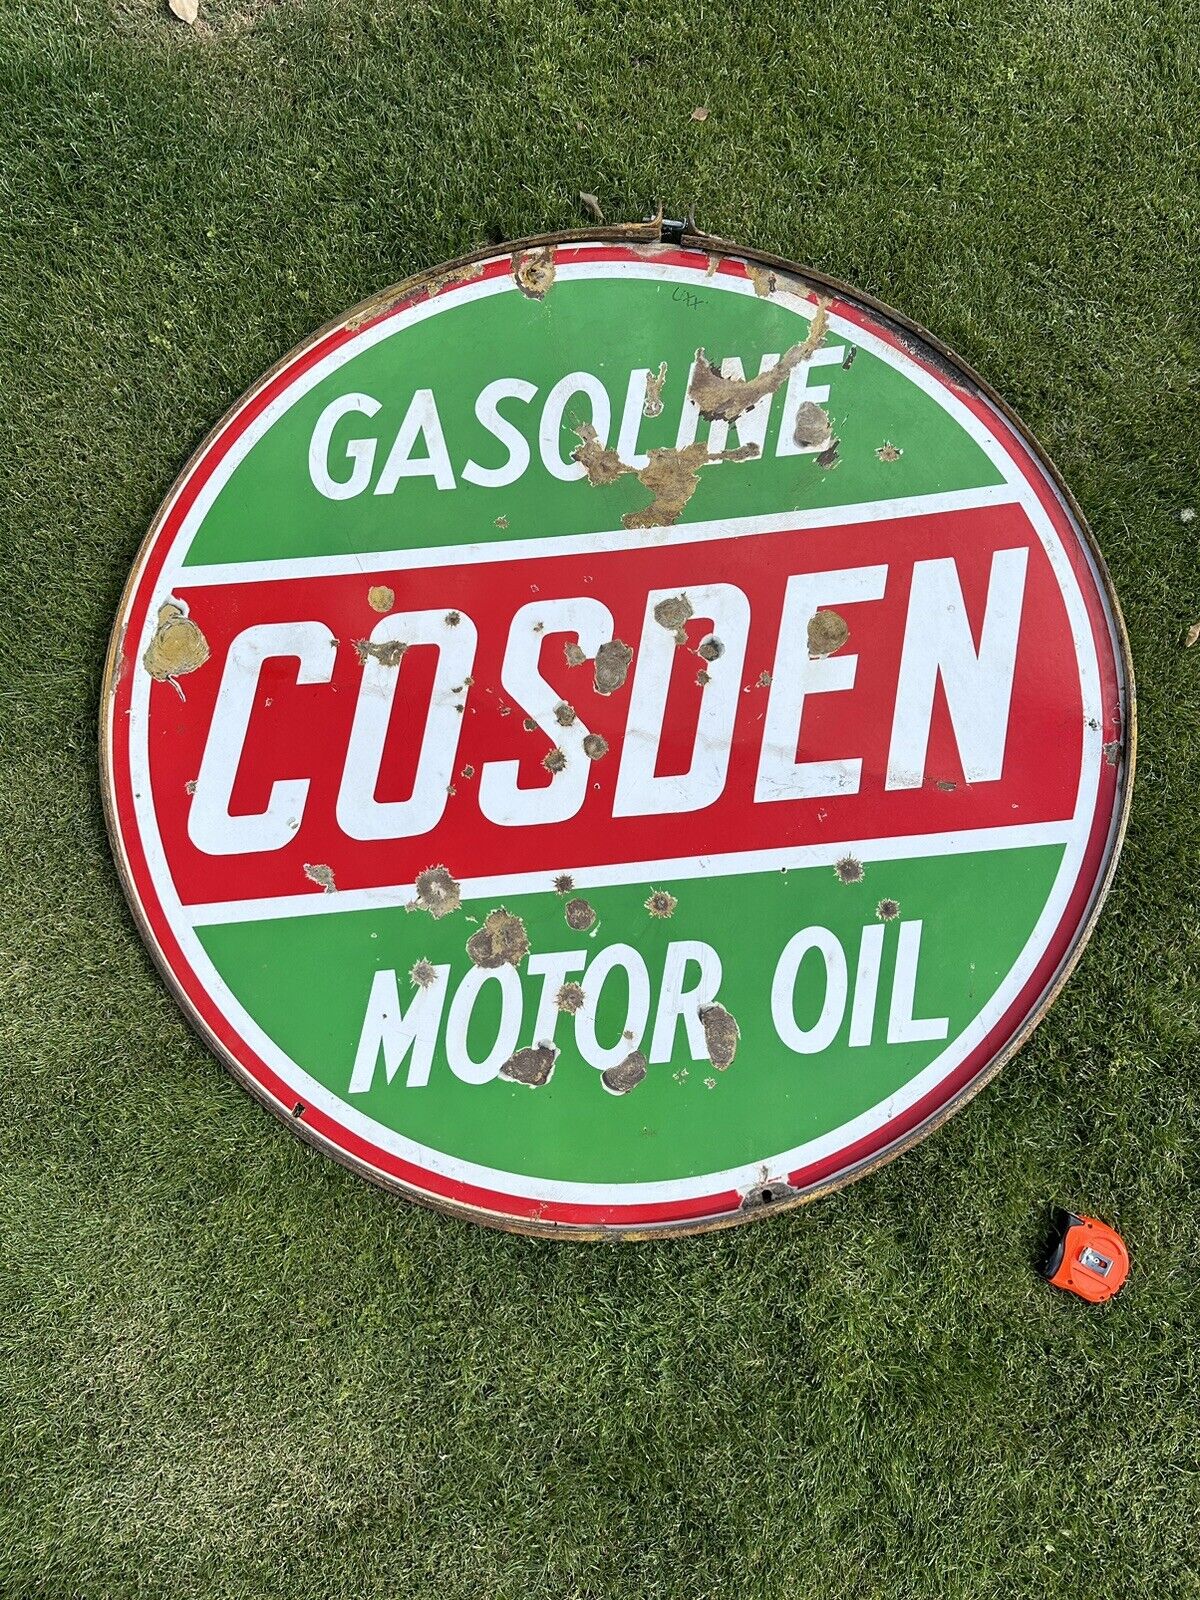 Original Vintage Double Sided In Original Ring Cosden Motor Oil/Gasoline Sign